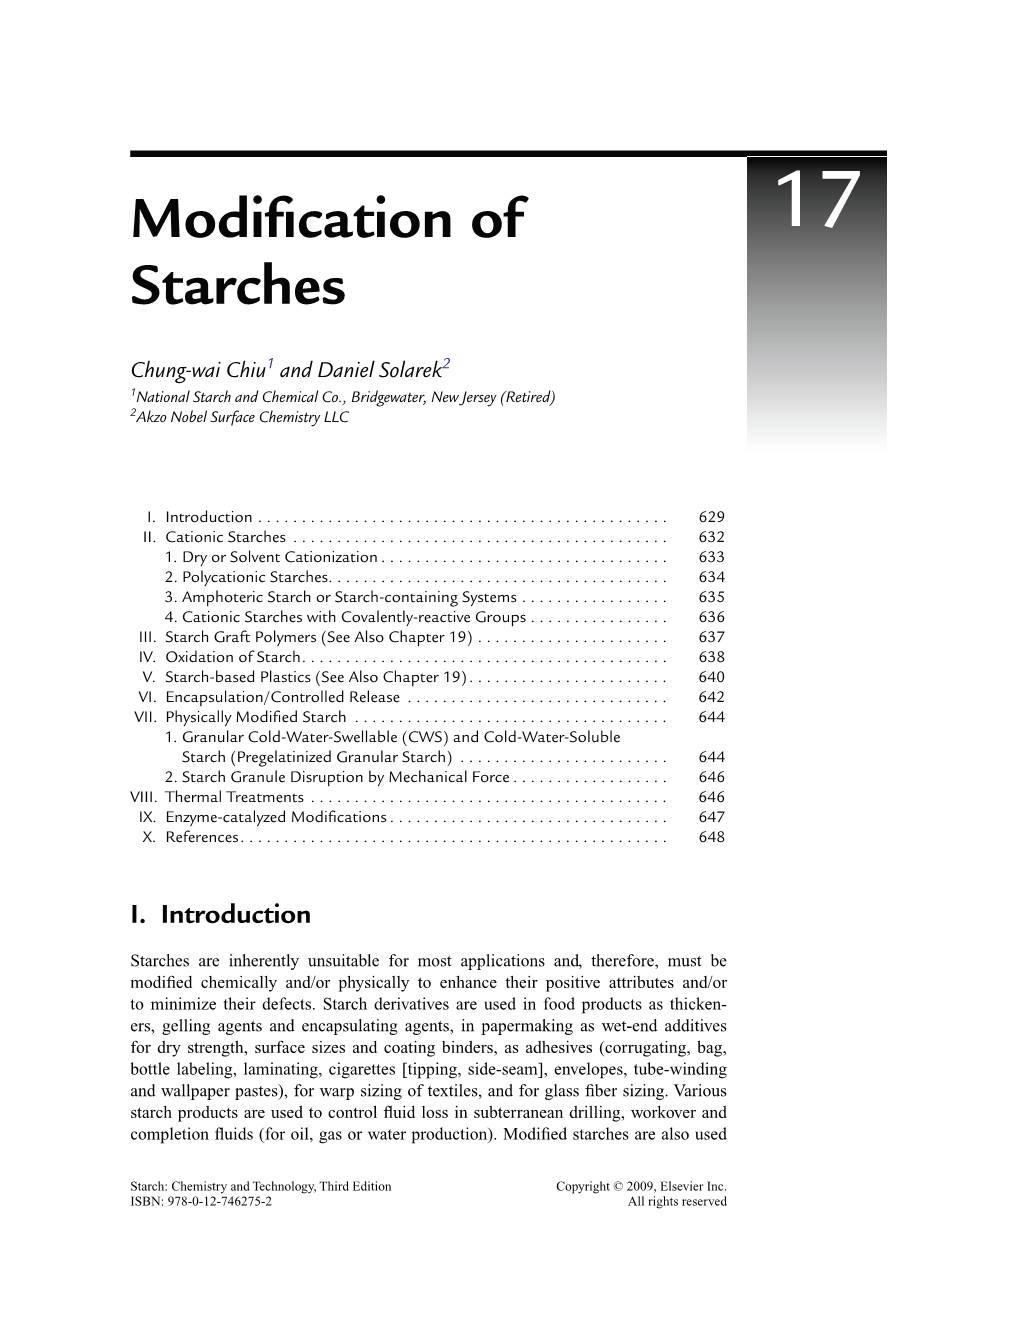 Modification of Starches